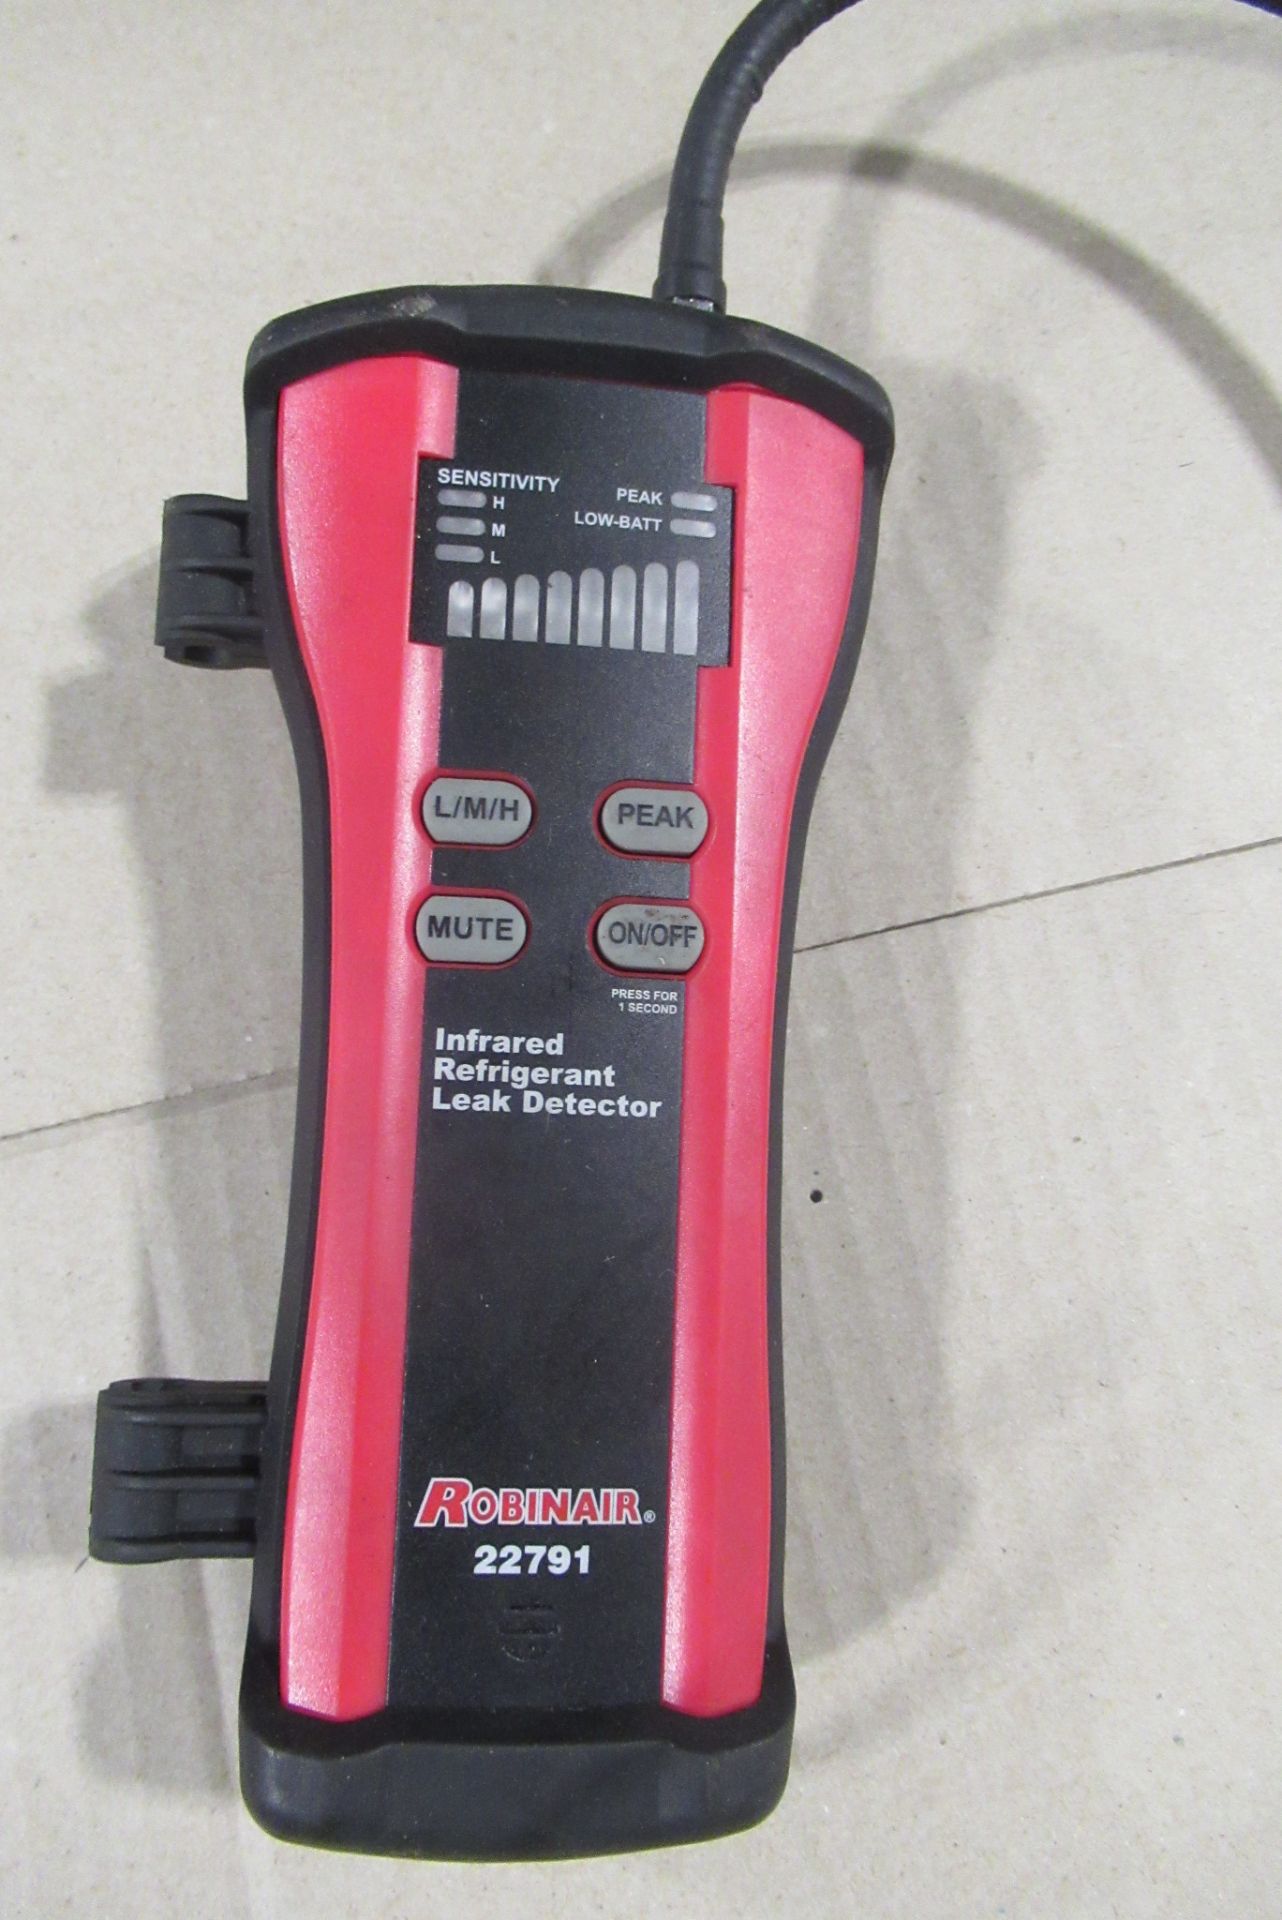 Robinair Infrared Refrigerant Leak Detector - Image 2 of 2